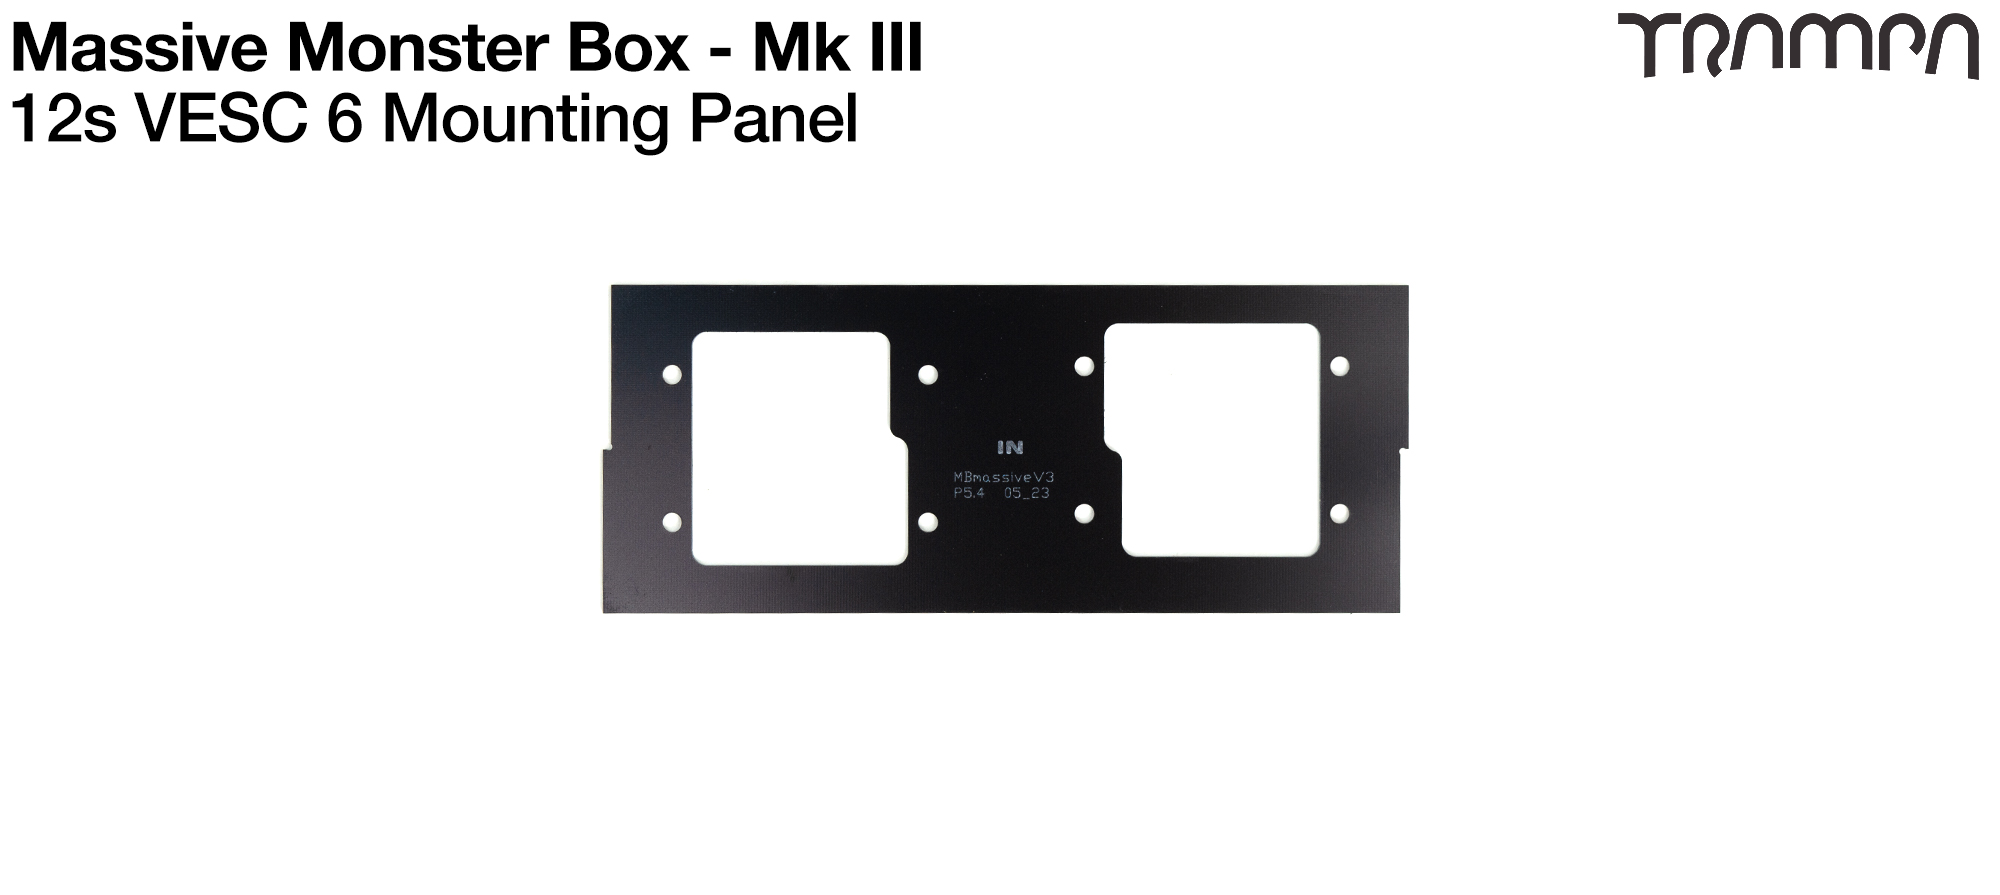 Mk III MASSIVE Monster Box - Panel to fit 2x VESC 6 